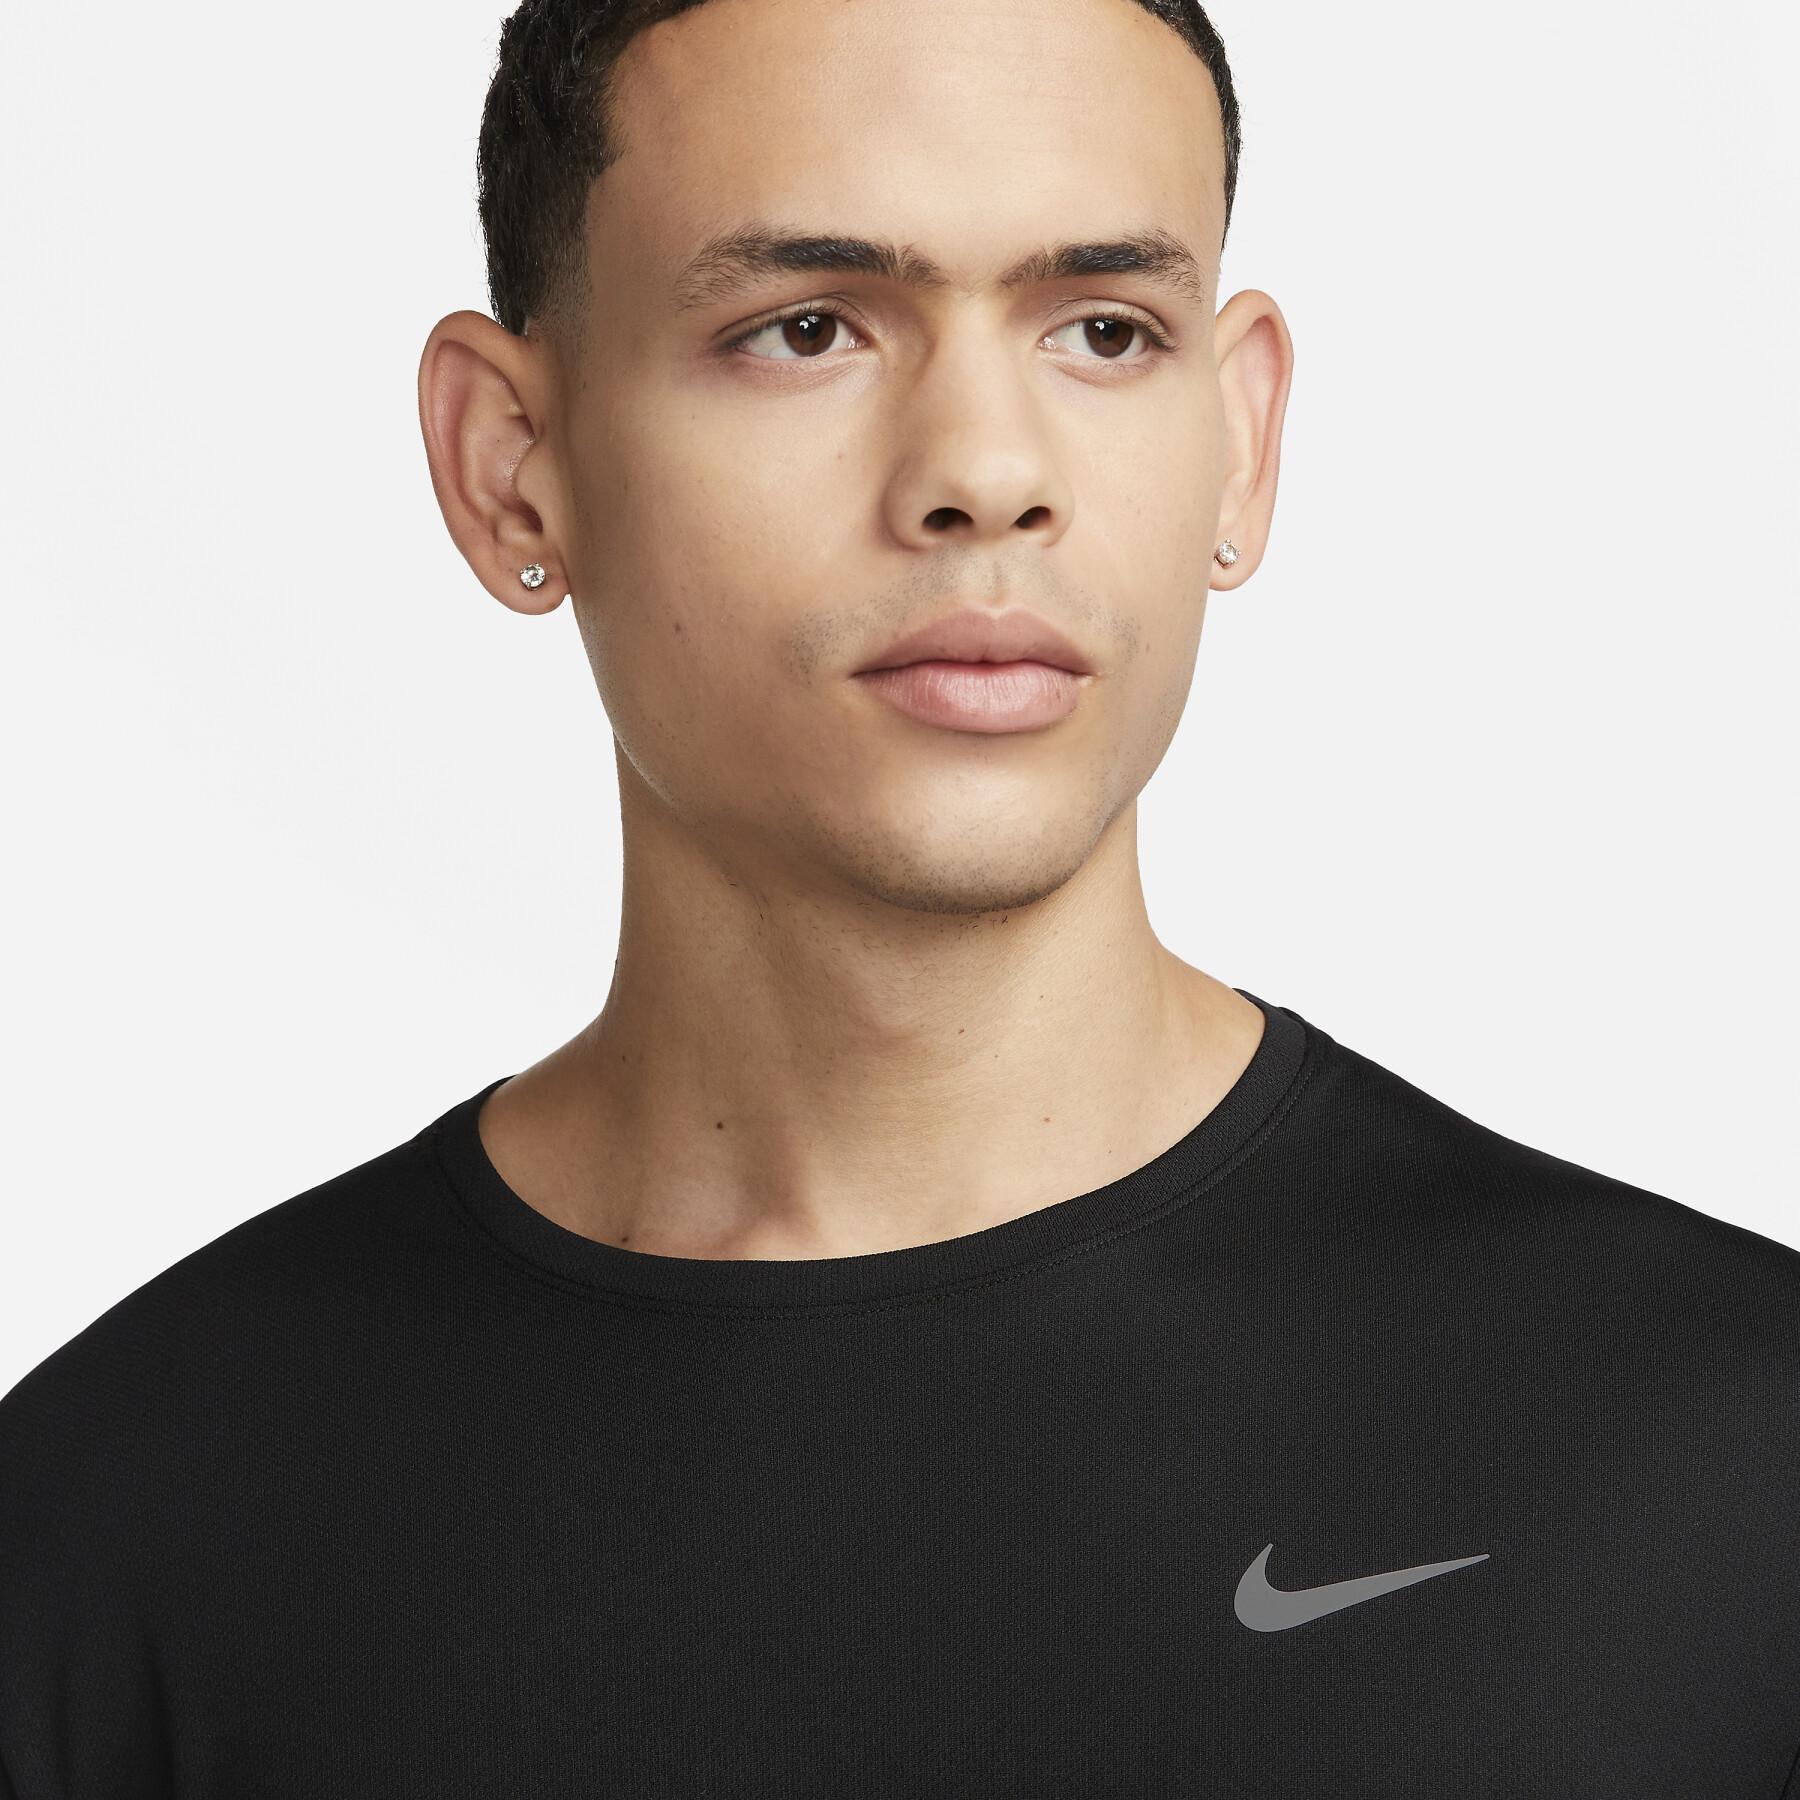 Camiseta Nike Dri-FIT UV Miler